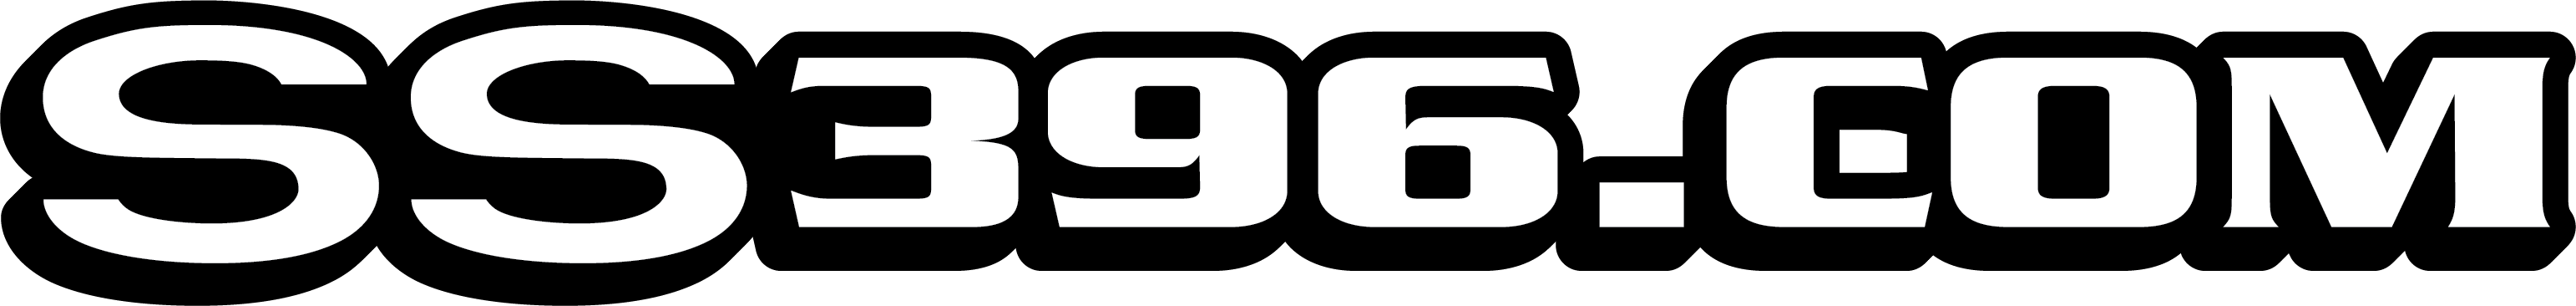 SS396 Logo